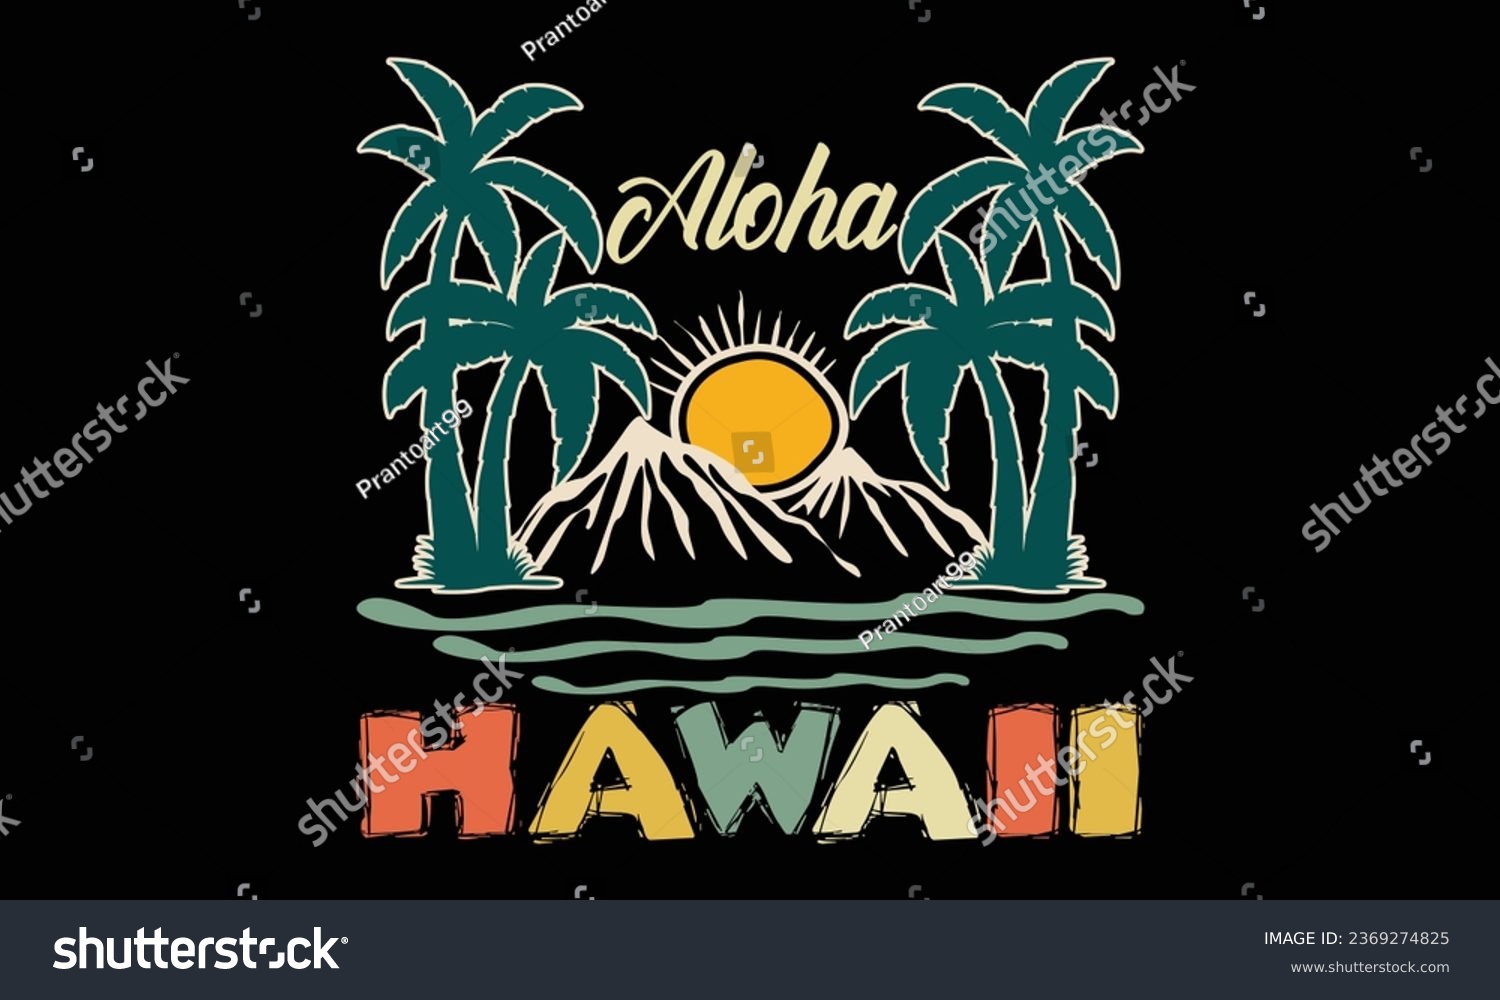 SVG of Aloha Hawaii Surfing Beach California Design,
California Surfing Boats Colorful Beach  Illustration Design, Hello, Summer California Beach Vector T-shirt Design. svg